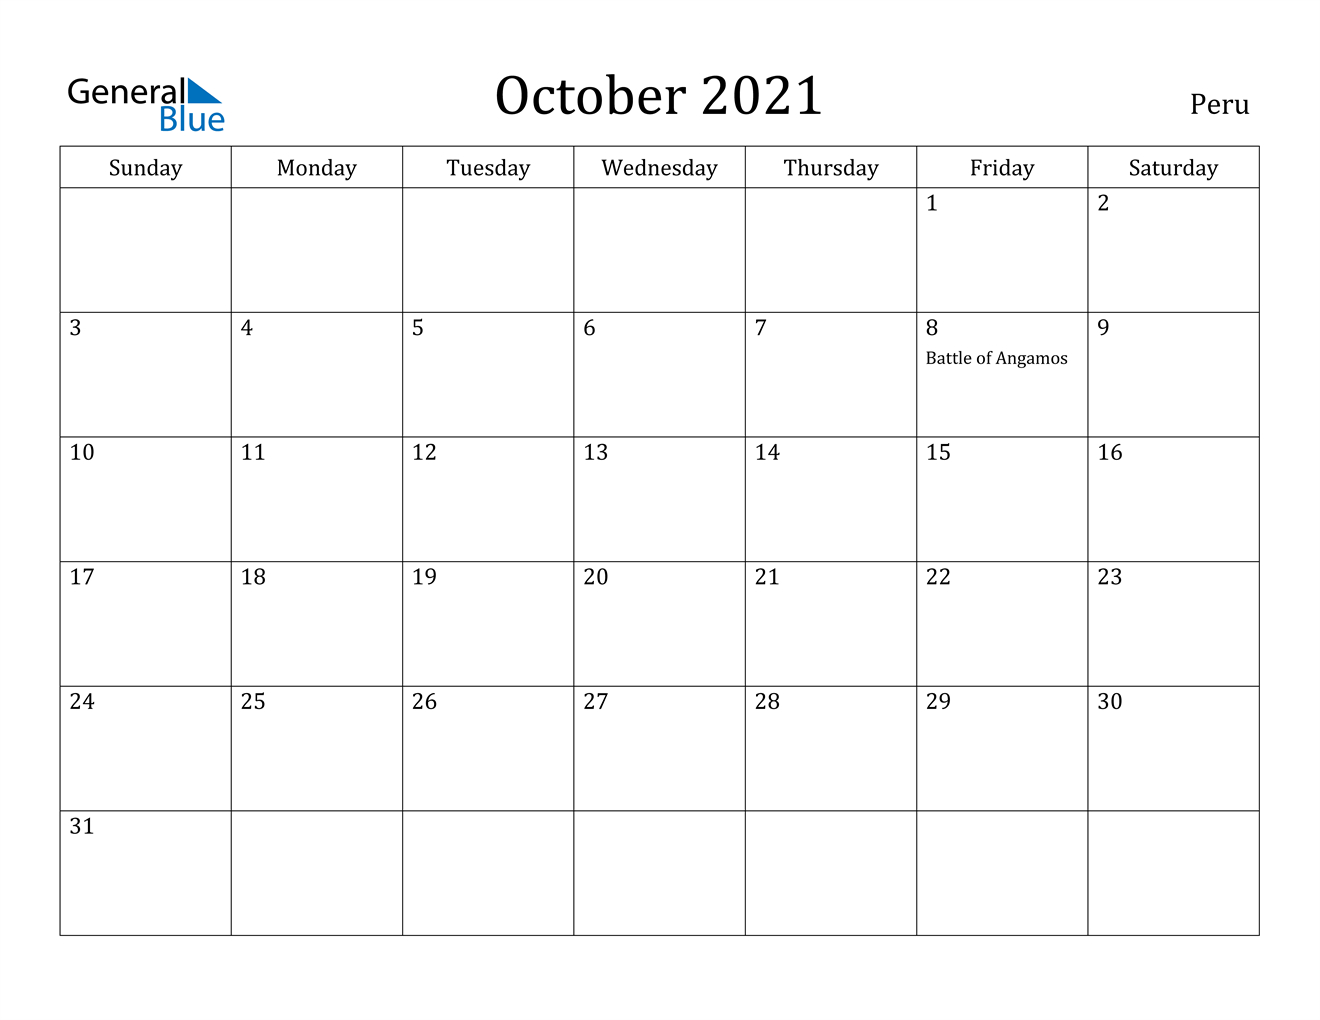 October 2021 Calendar - Peru